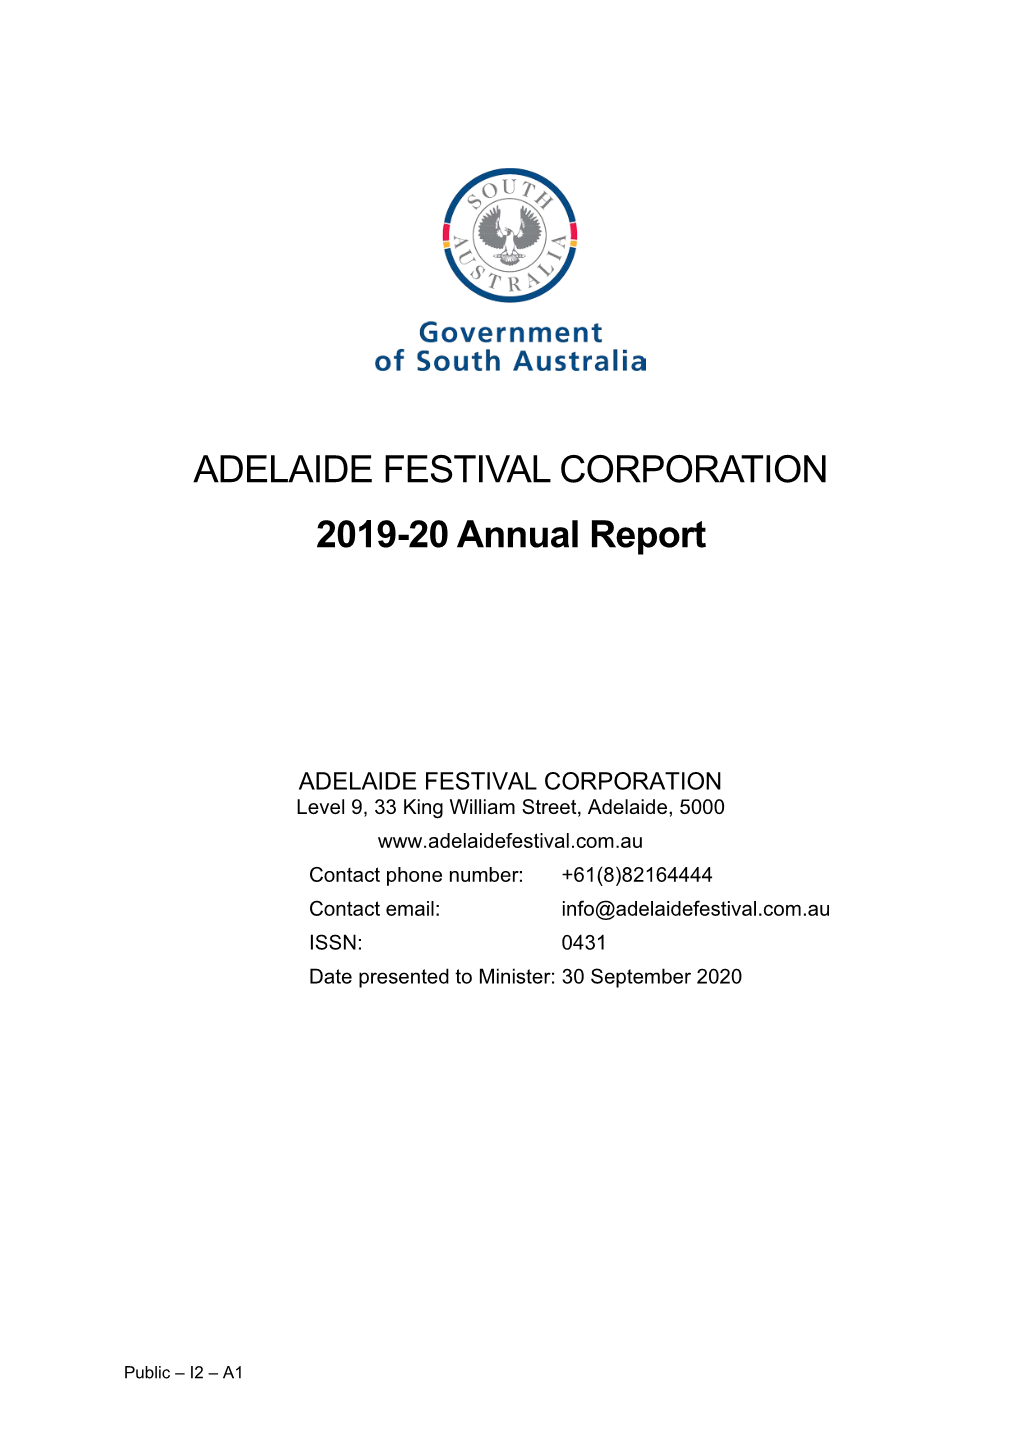 ADELAIDE FESTIVAL CORPORATION 2019-20 Annual Report